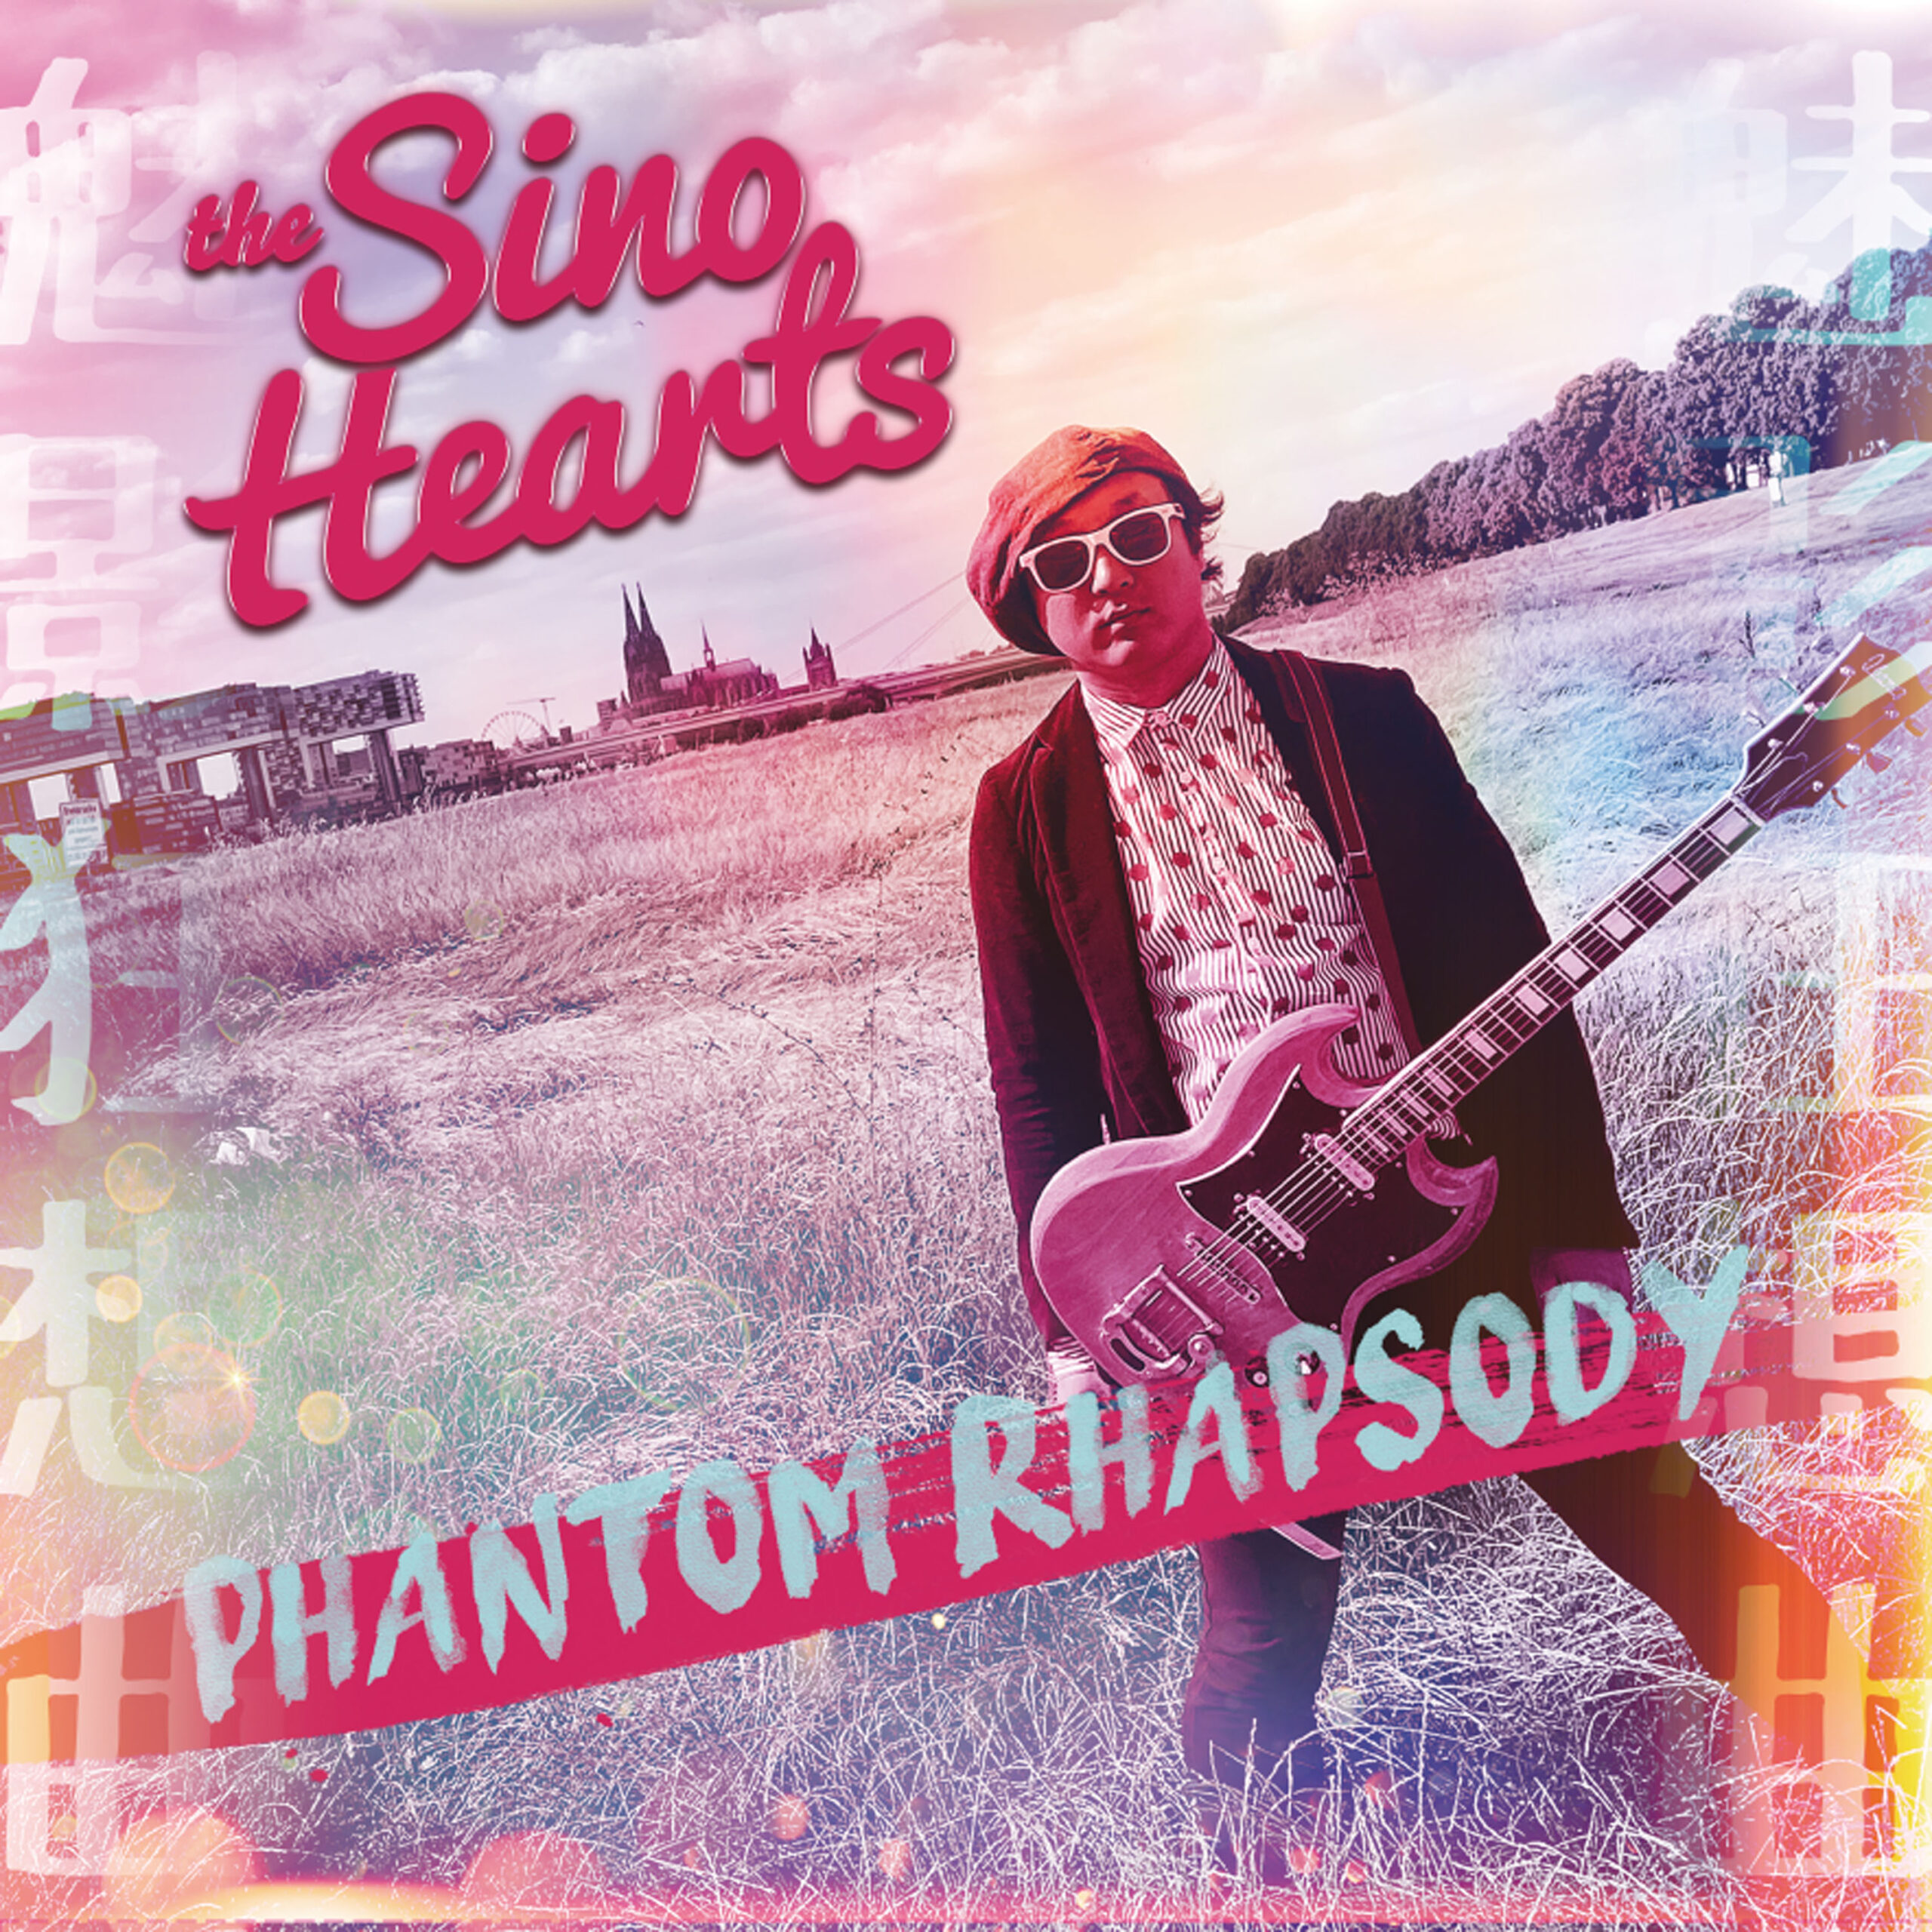 The Sino Hearts - Phantome Rhapsody LP